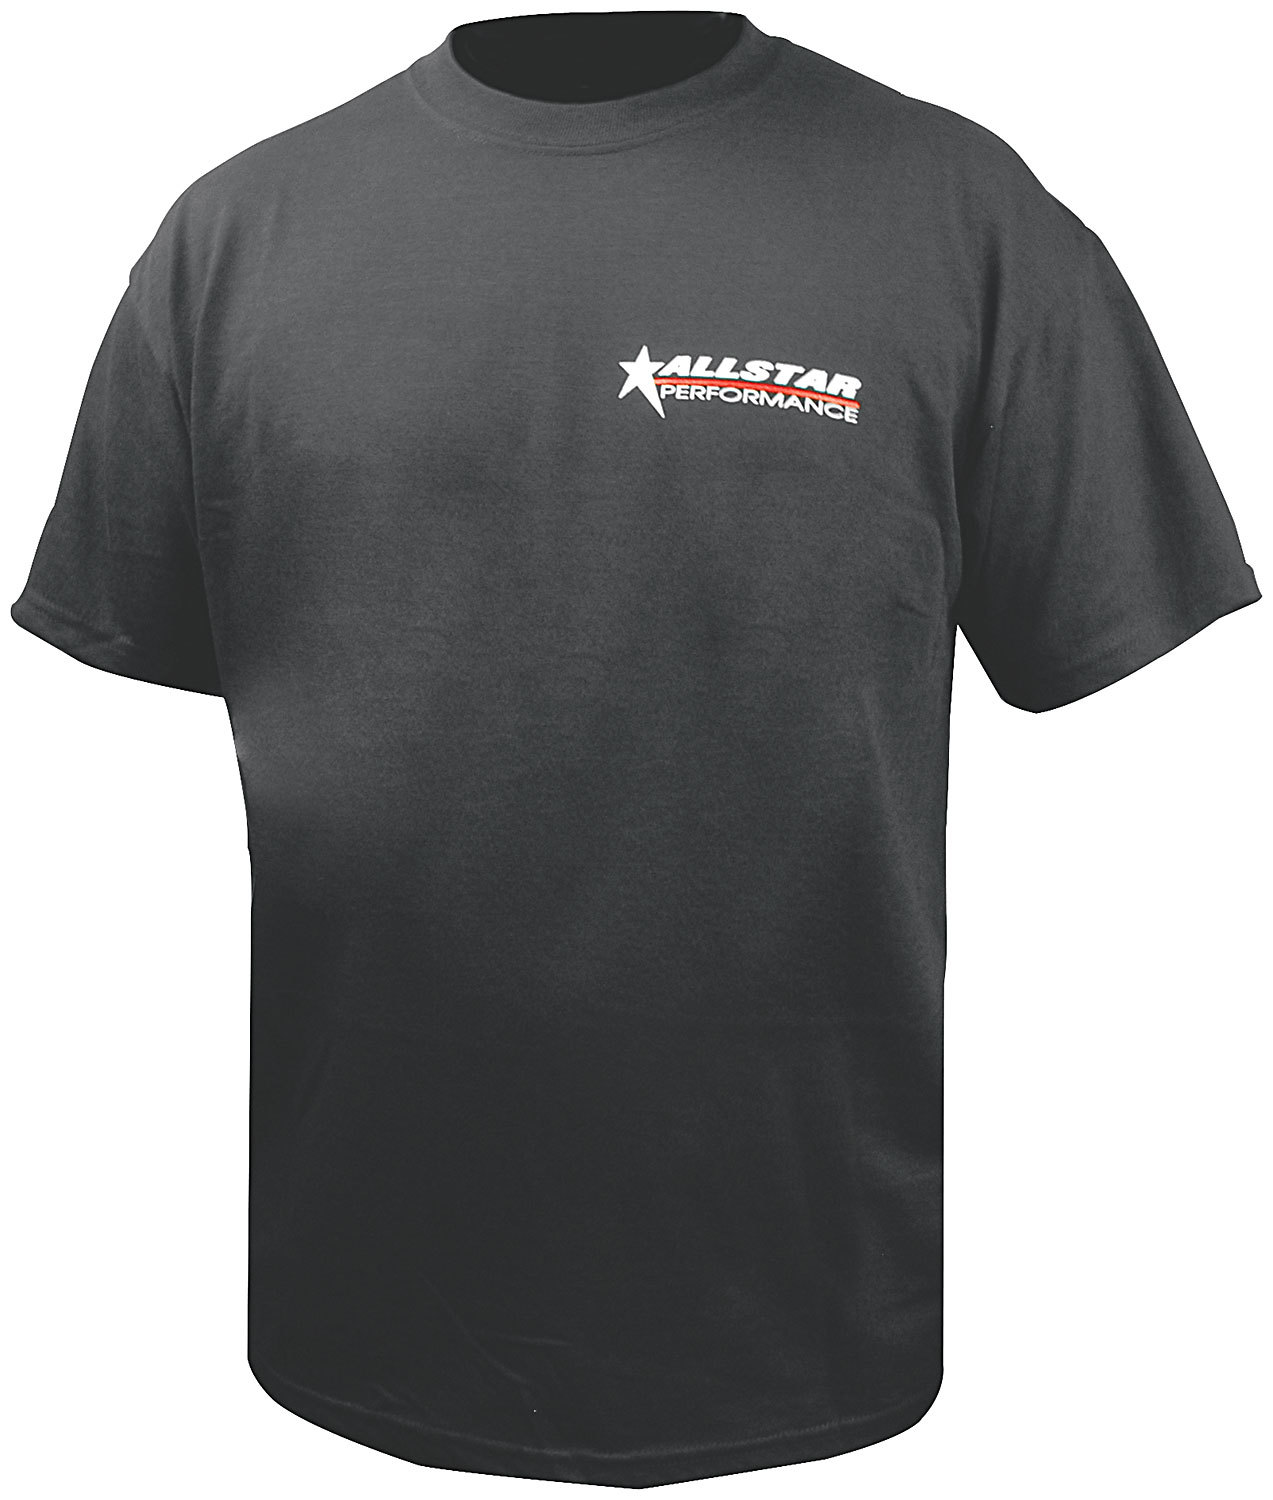 Allstar Performance  T-Shirt Charcoal XXX-Large